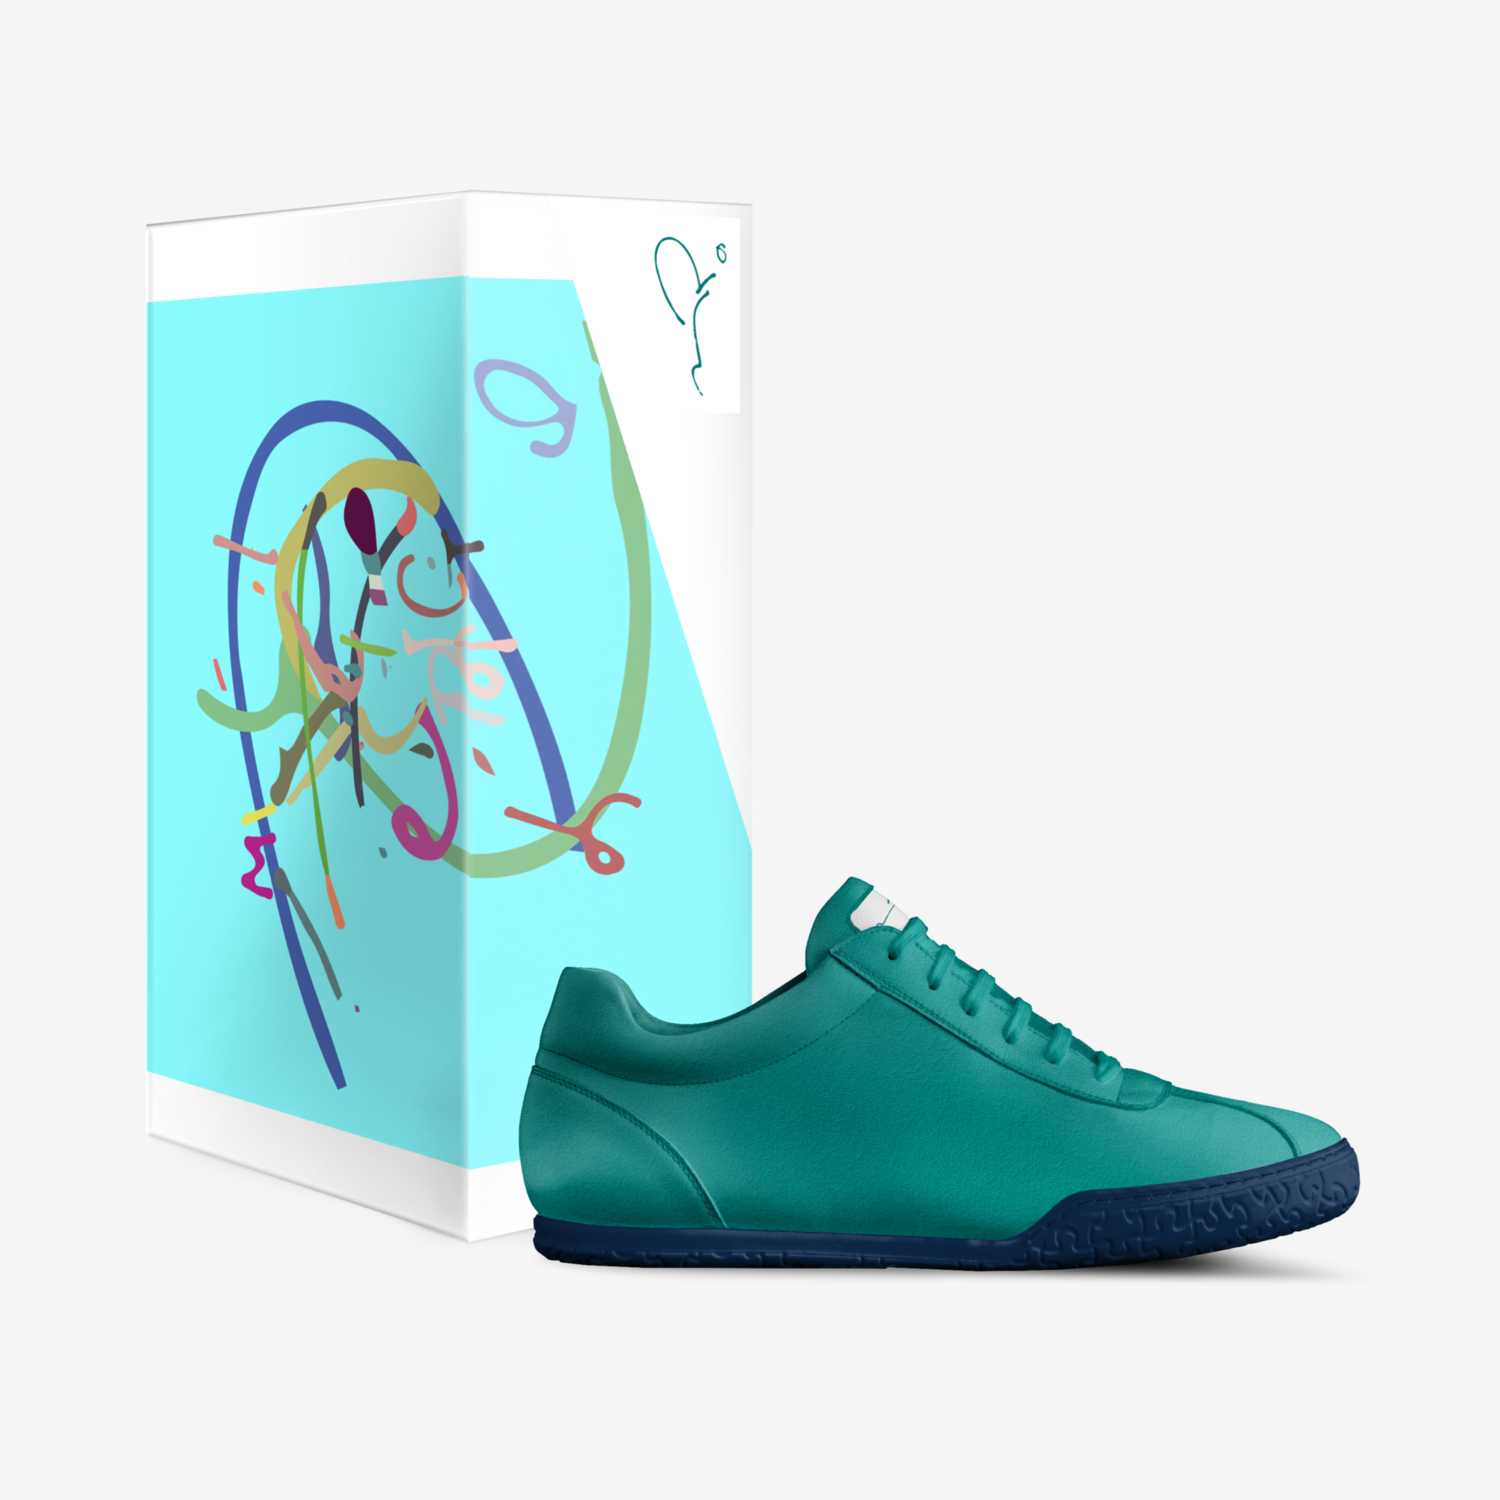 Matthew Pierce custom made in Italy shoes by Matthew Pierce | Box view